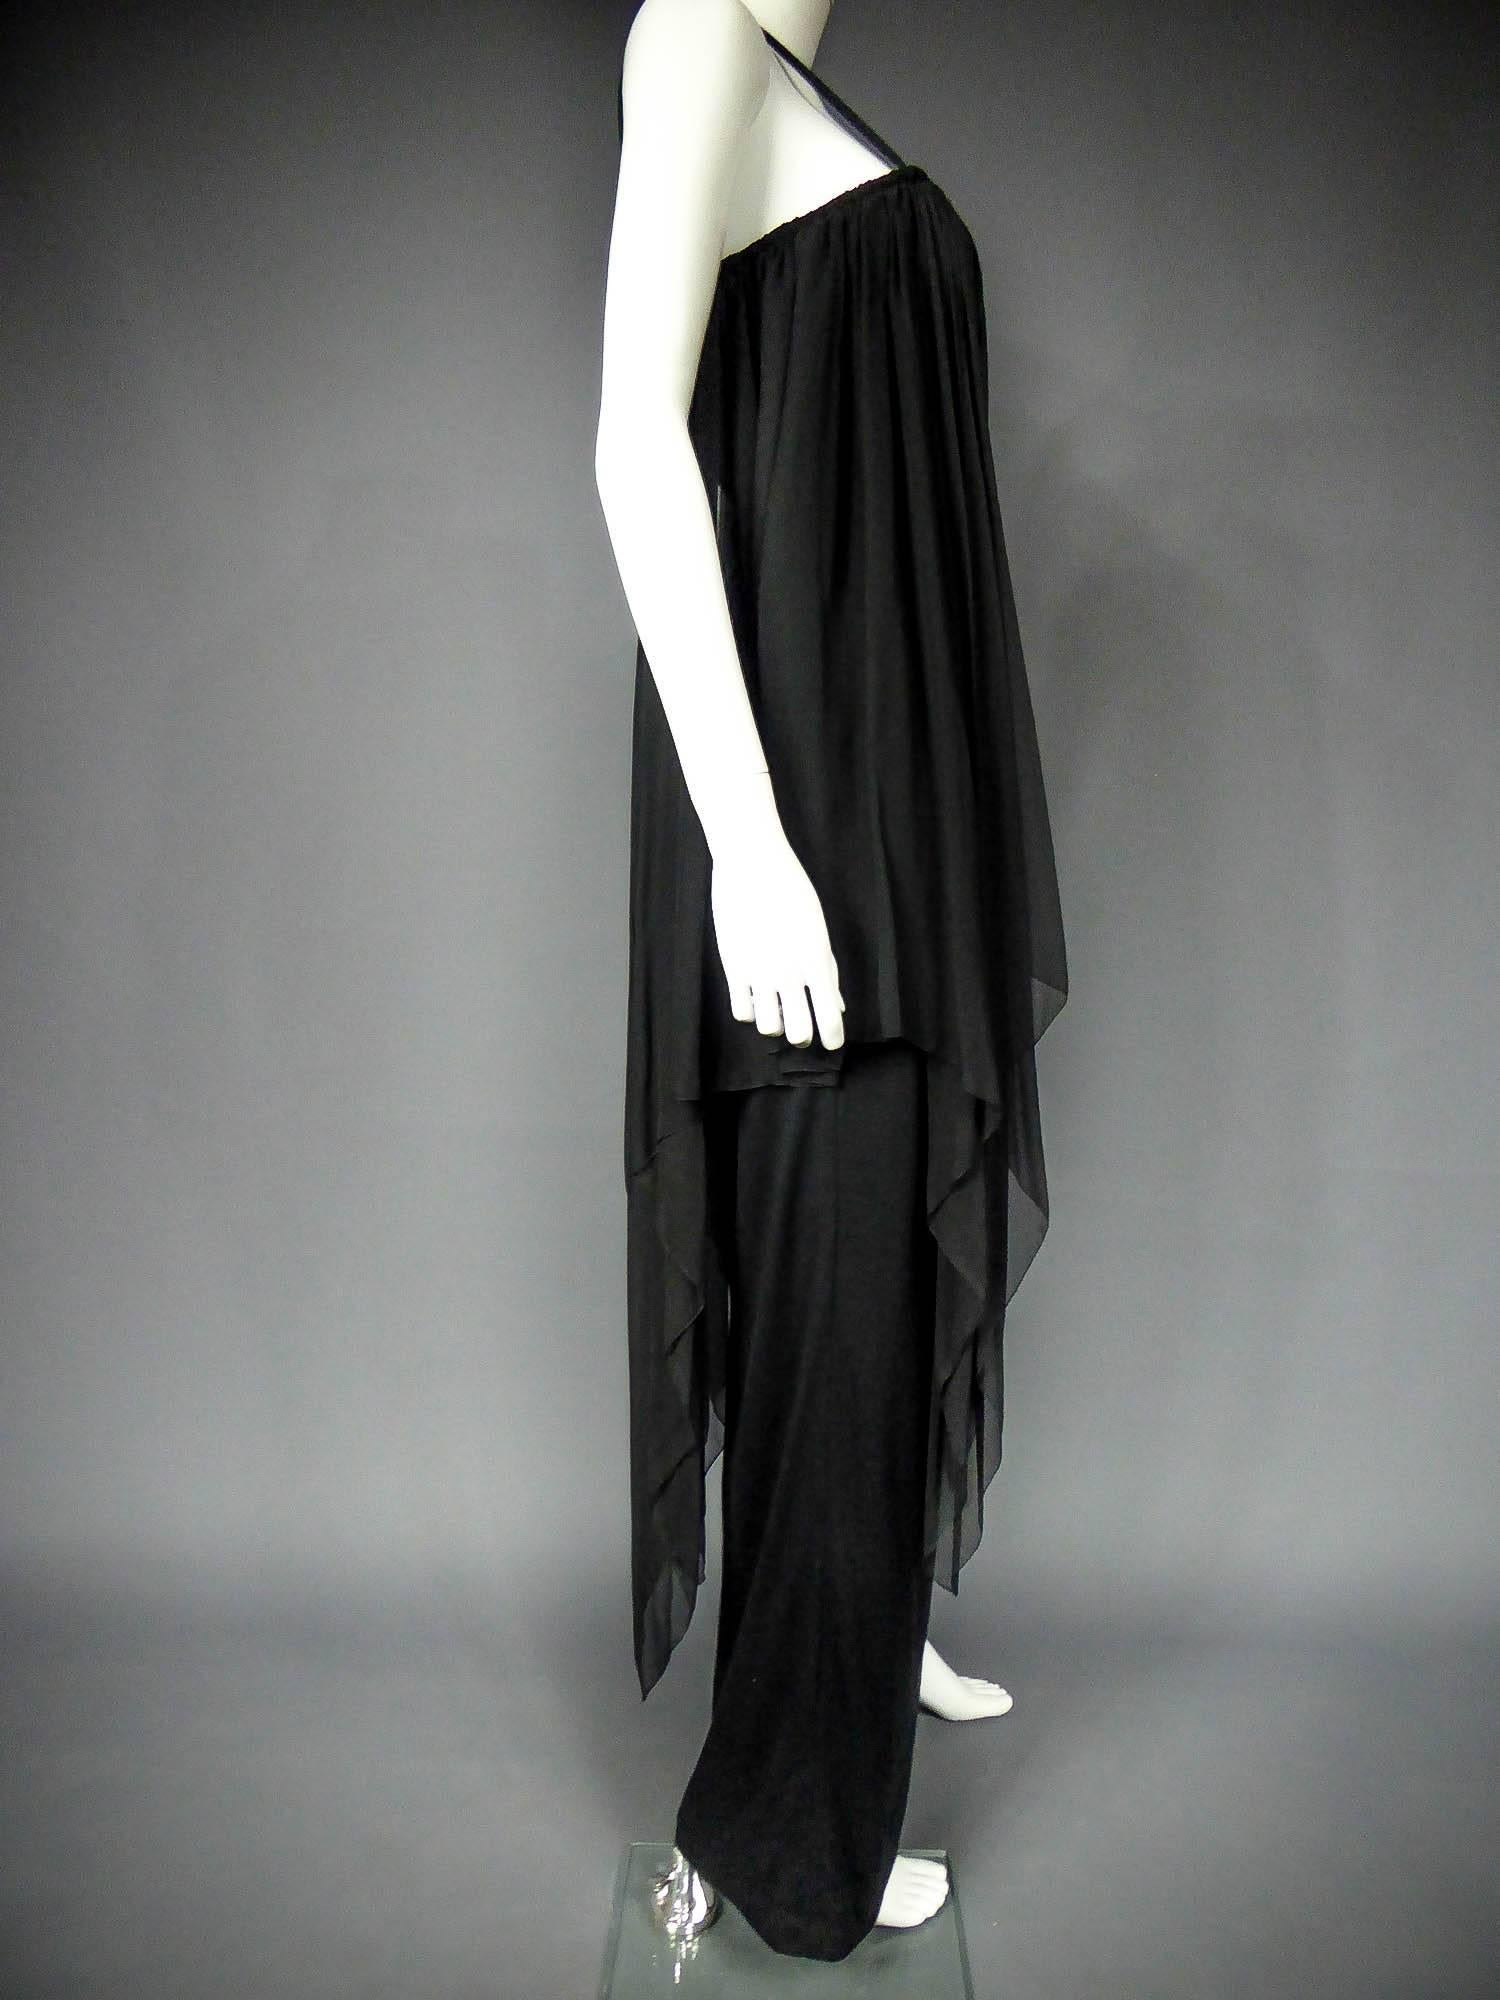 Black A Christian Dior Haute Couture Evening Dress by Marc Bohan Circa 1975 For Sale